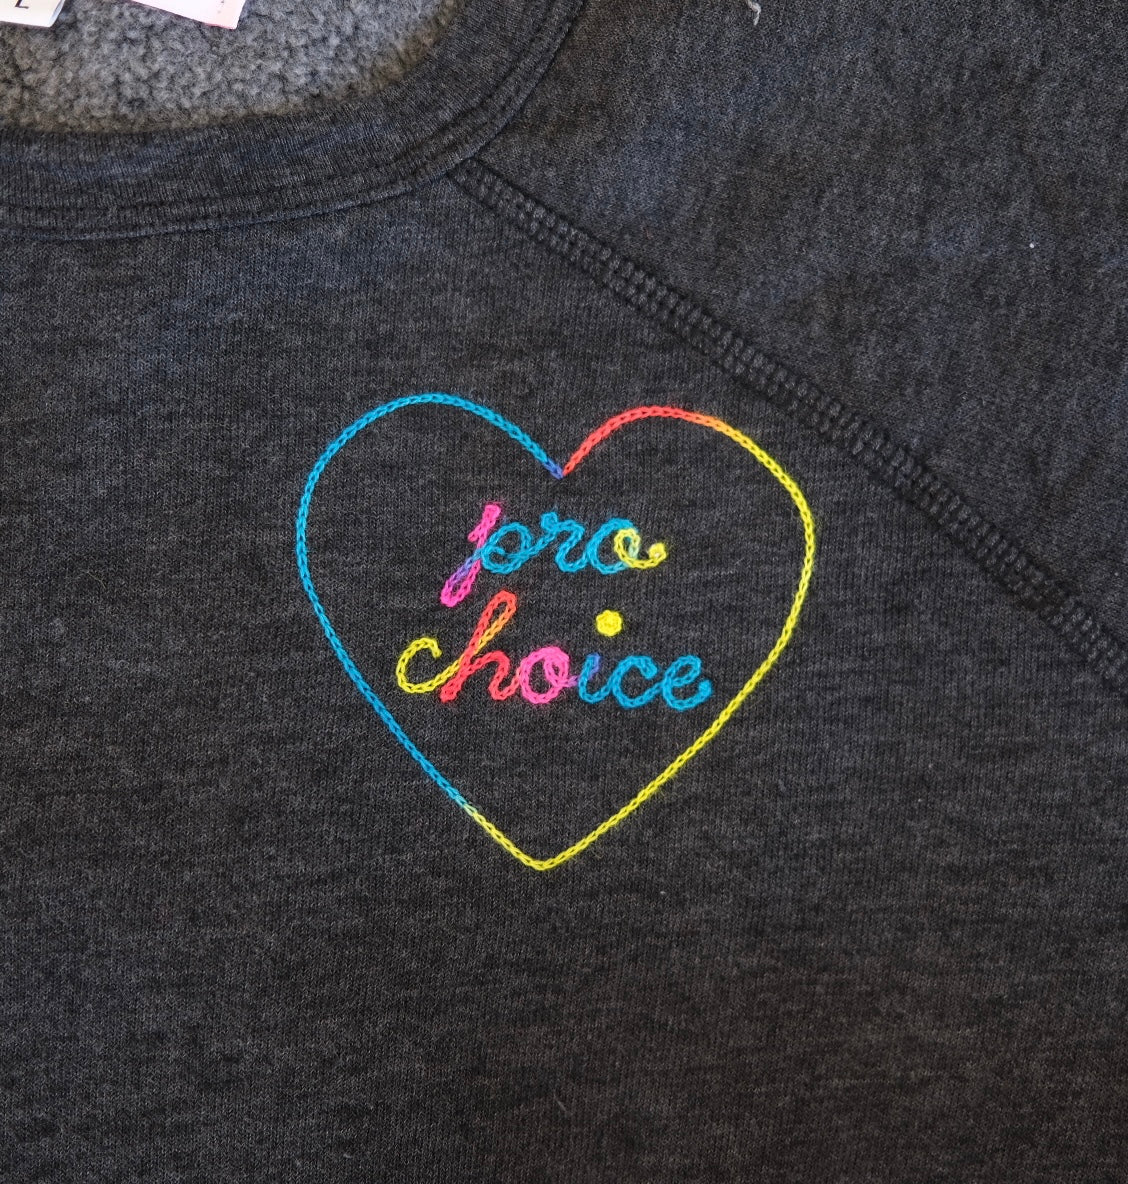 Pro Choice Heart Embroidered Crew Neck Sweatshirt